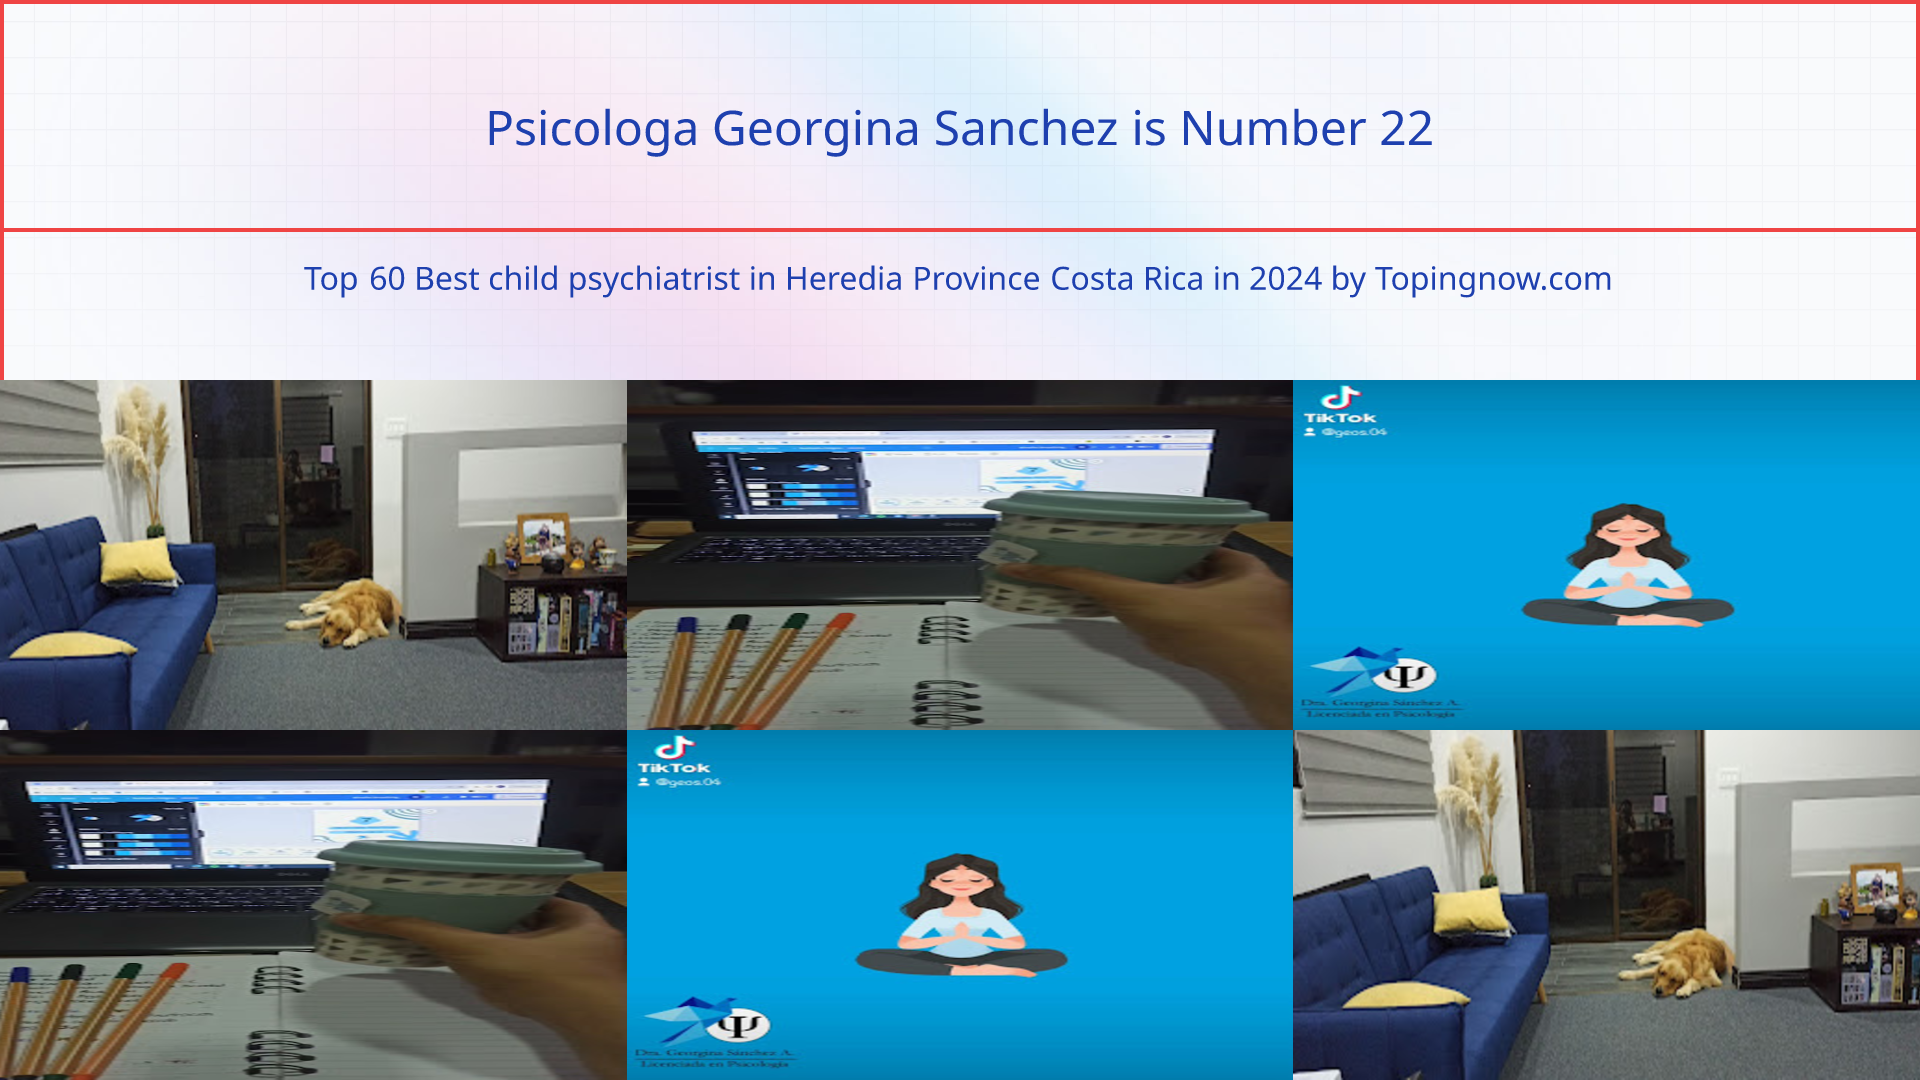 Psicologa Georgina Sanchez: Top 60 Best child psychiatrist in Heredia Province Costa Rica in 2024